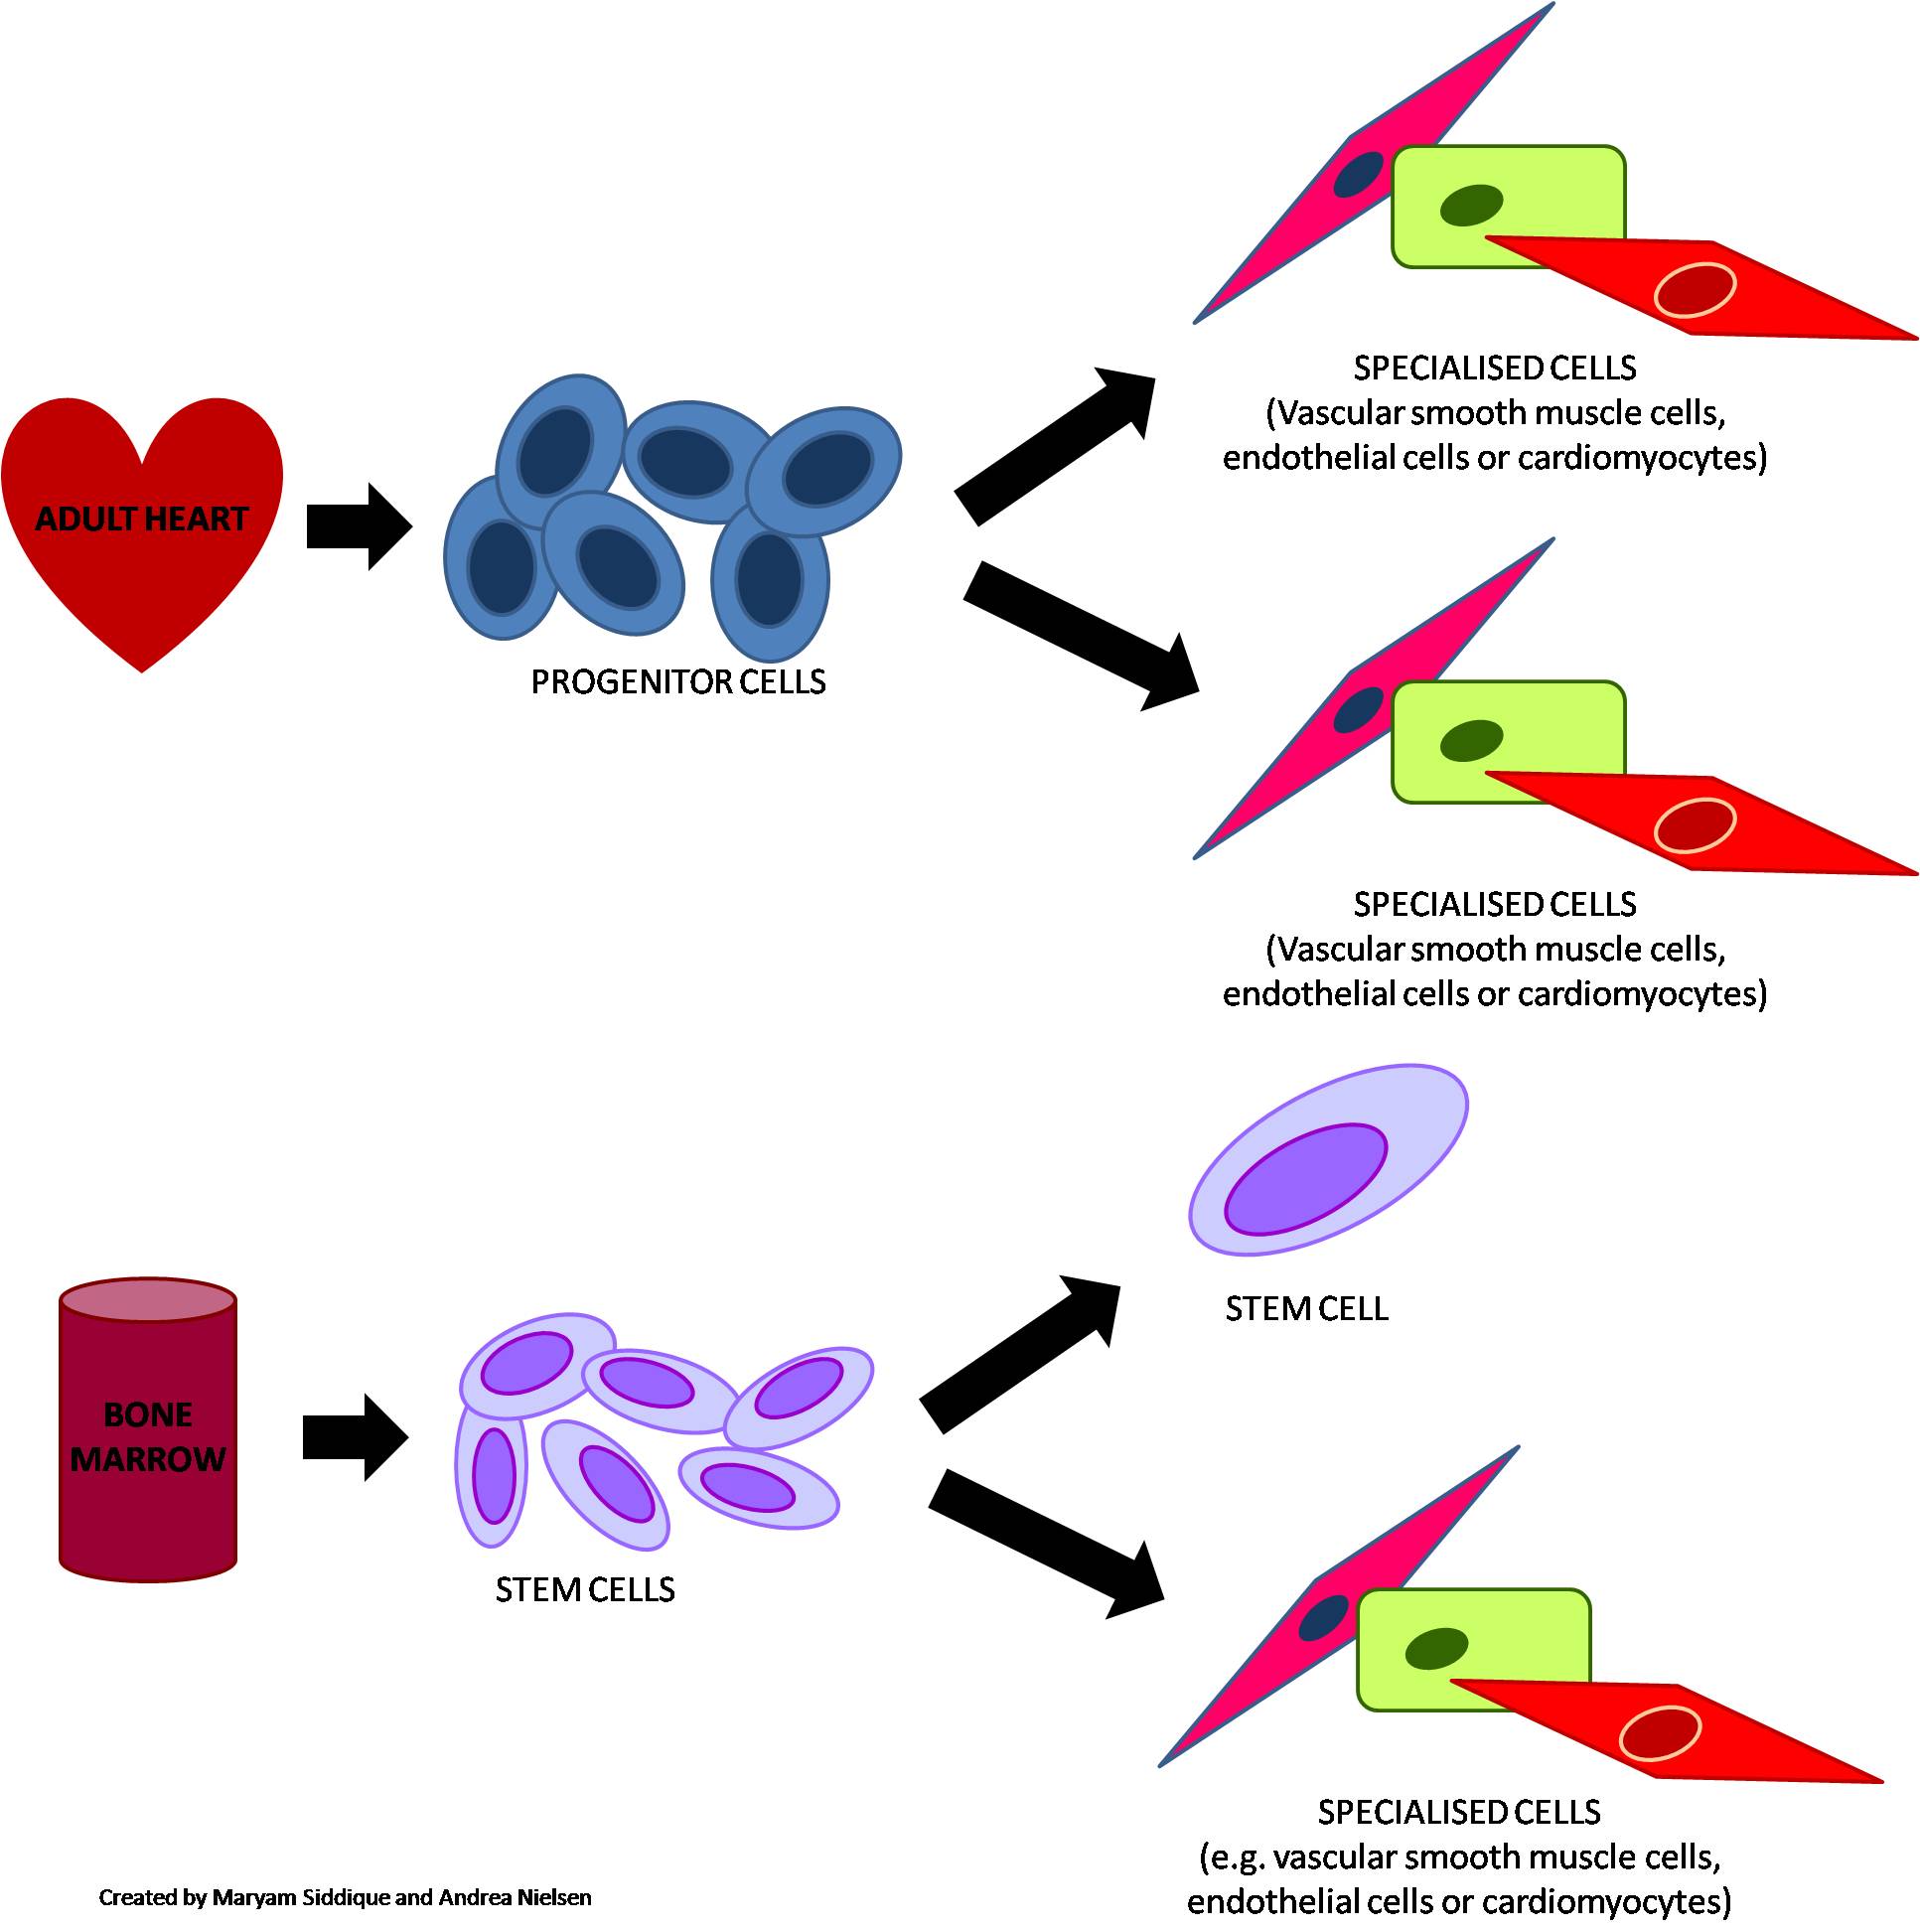 Hematopoietic Stem Cells vs Progenitor Cells in Tabular Form